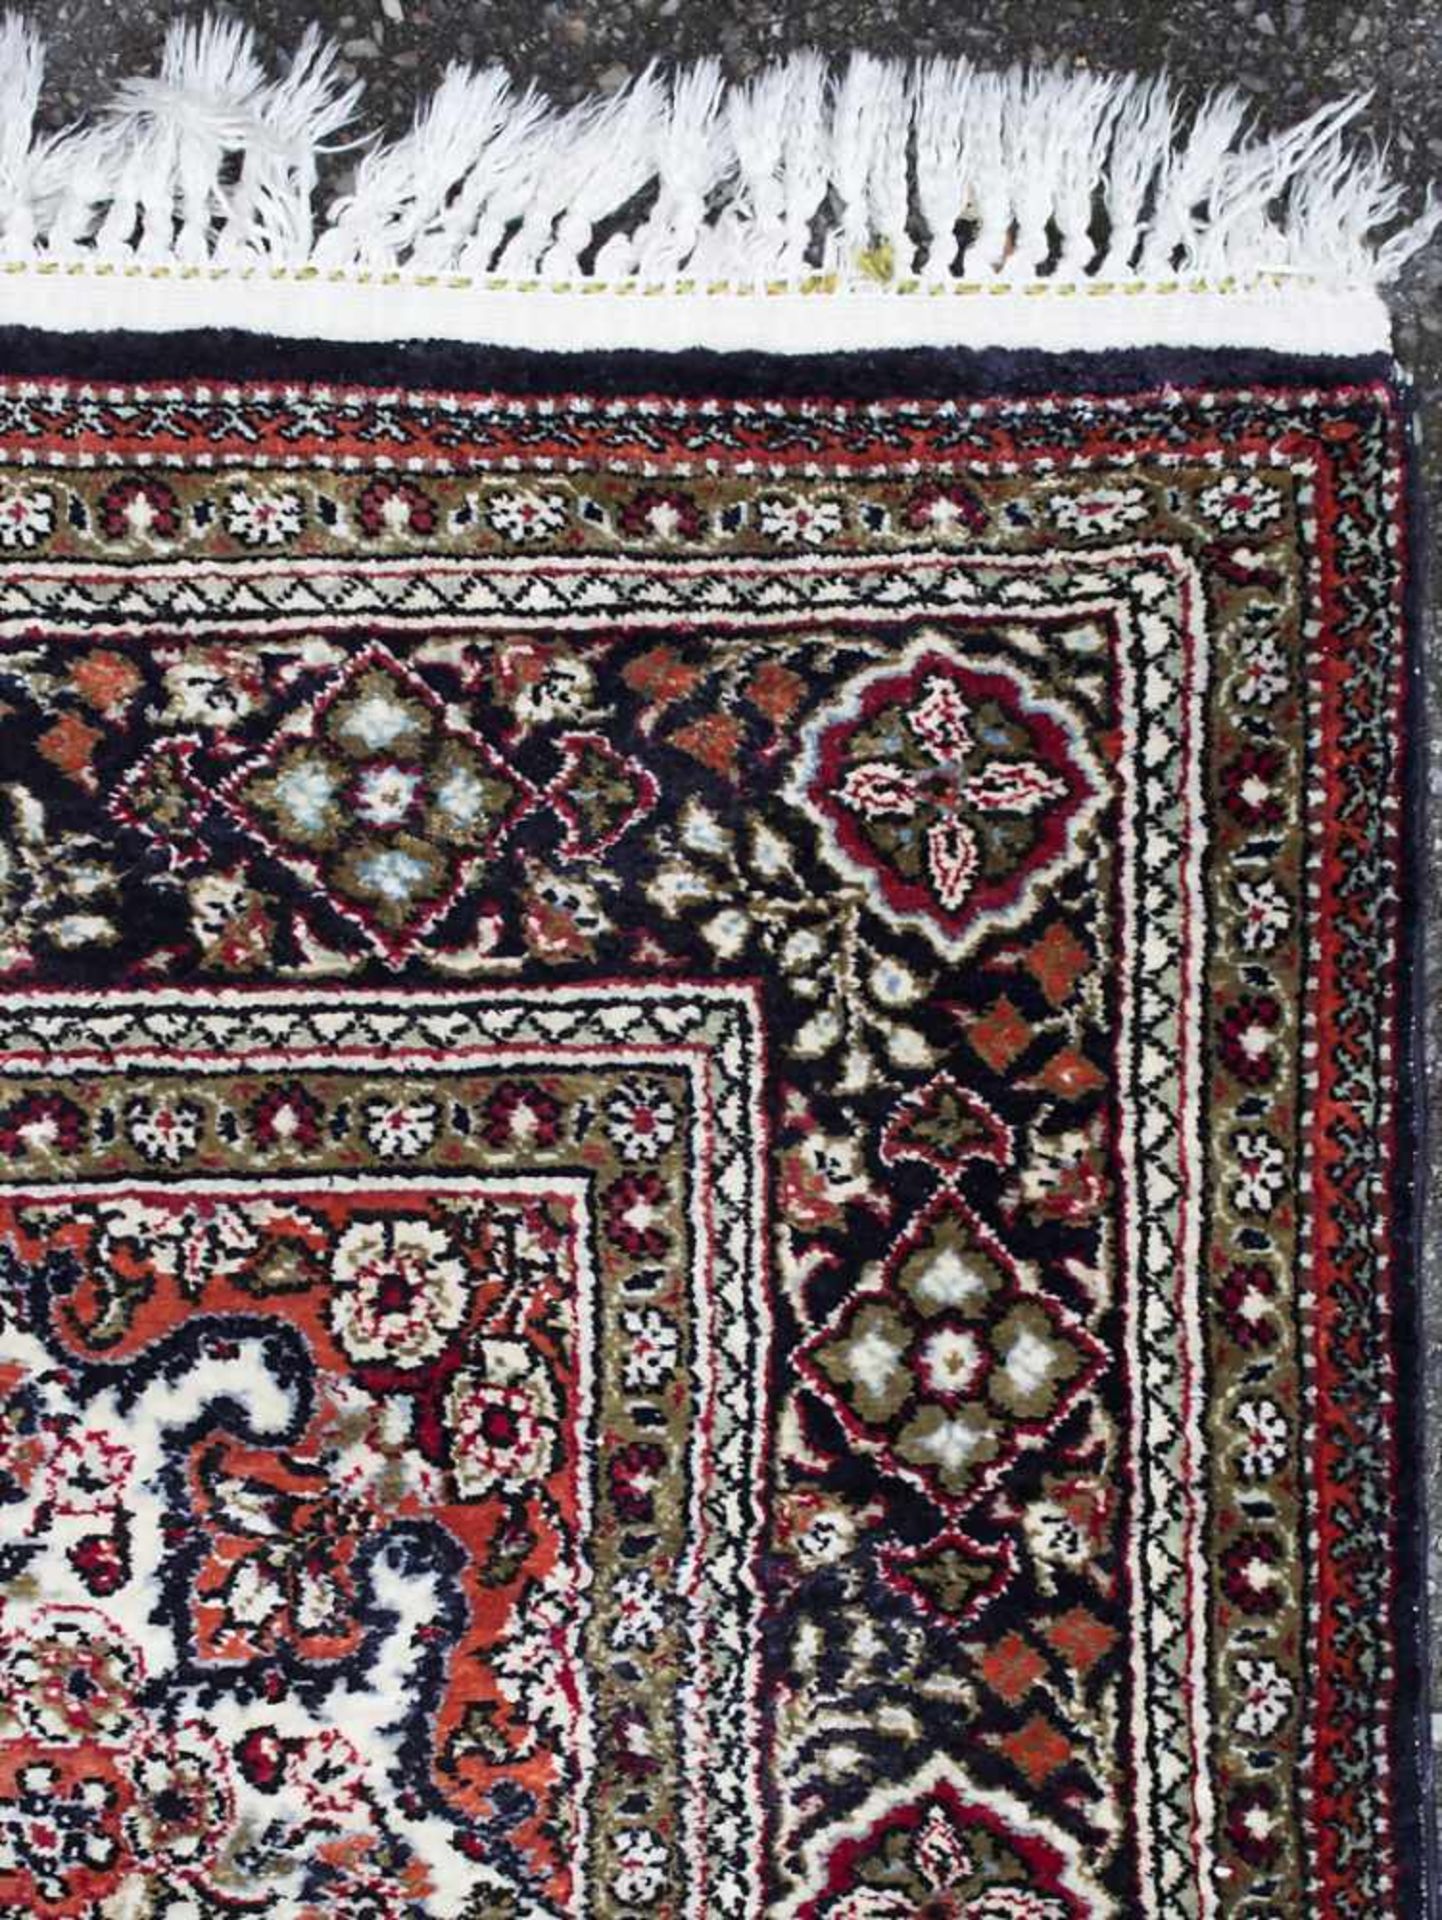 Seidenteppich / A silk carpetMaterial: Seide auf Seide, feine Knüpfung,Maße: 142 x 80 cm, Zustand: - Image 5 of 5